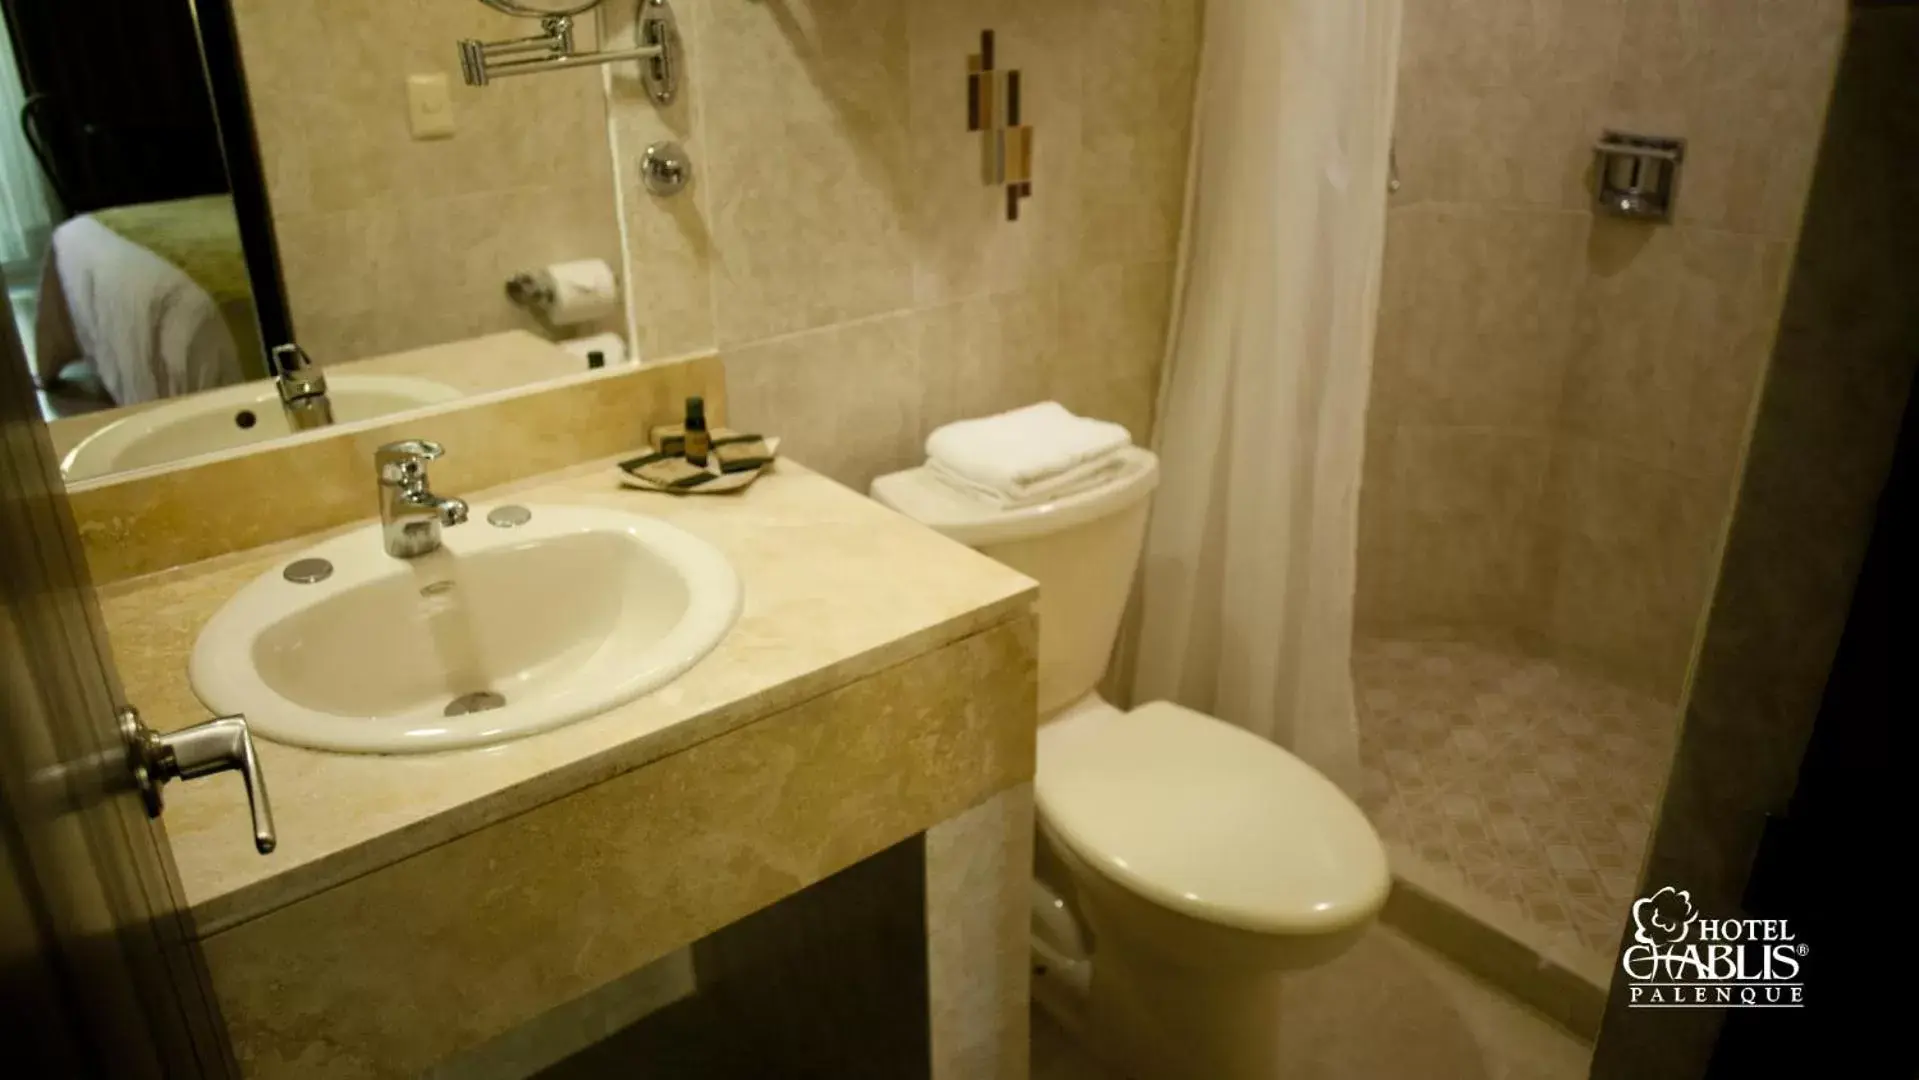 Toilet, Bathroom in Hotel Chablis Palenque